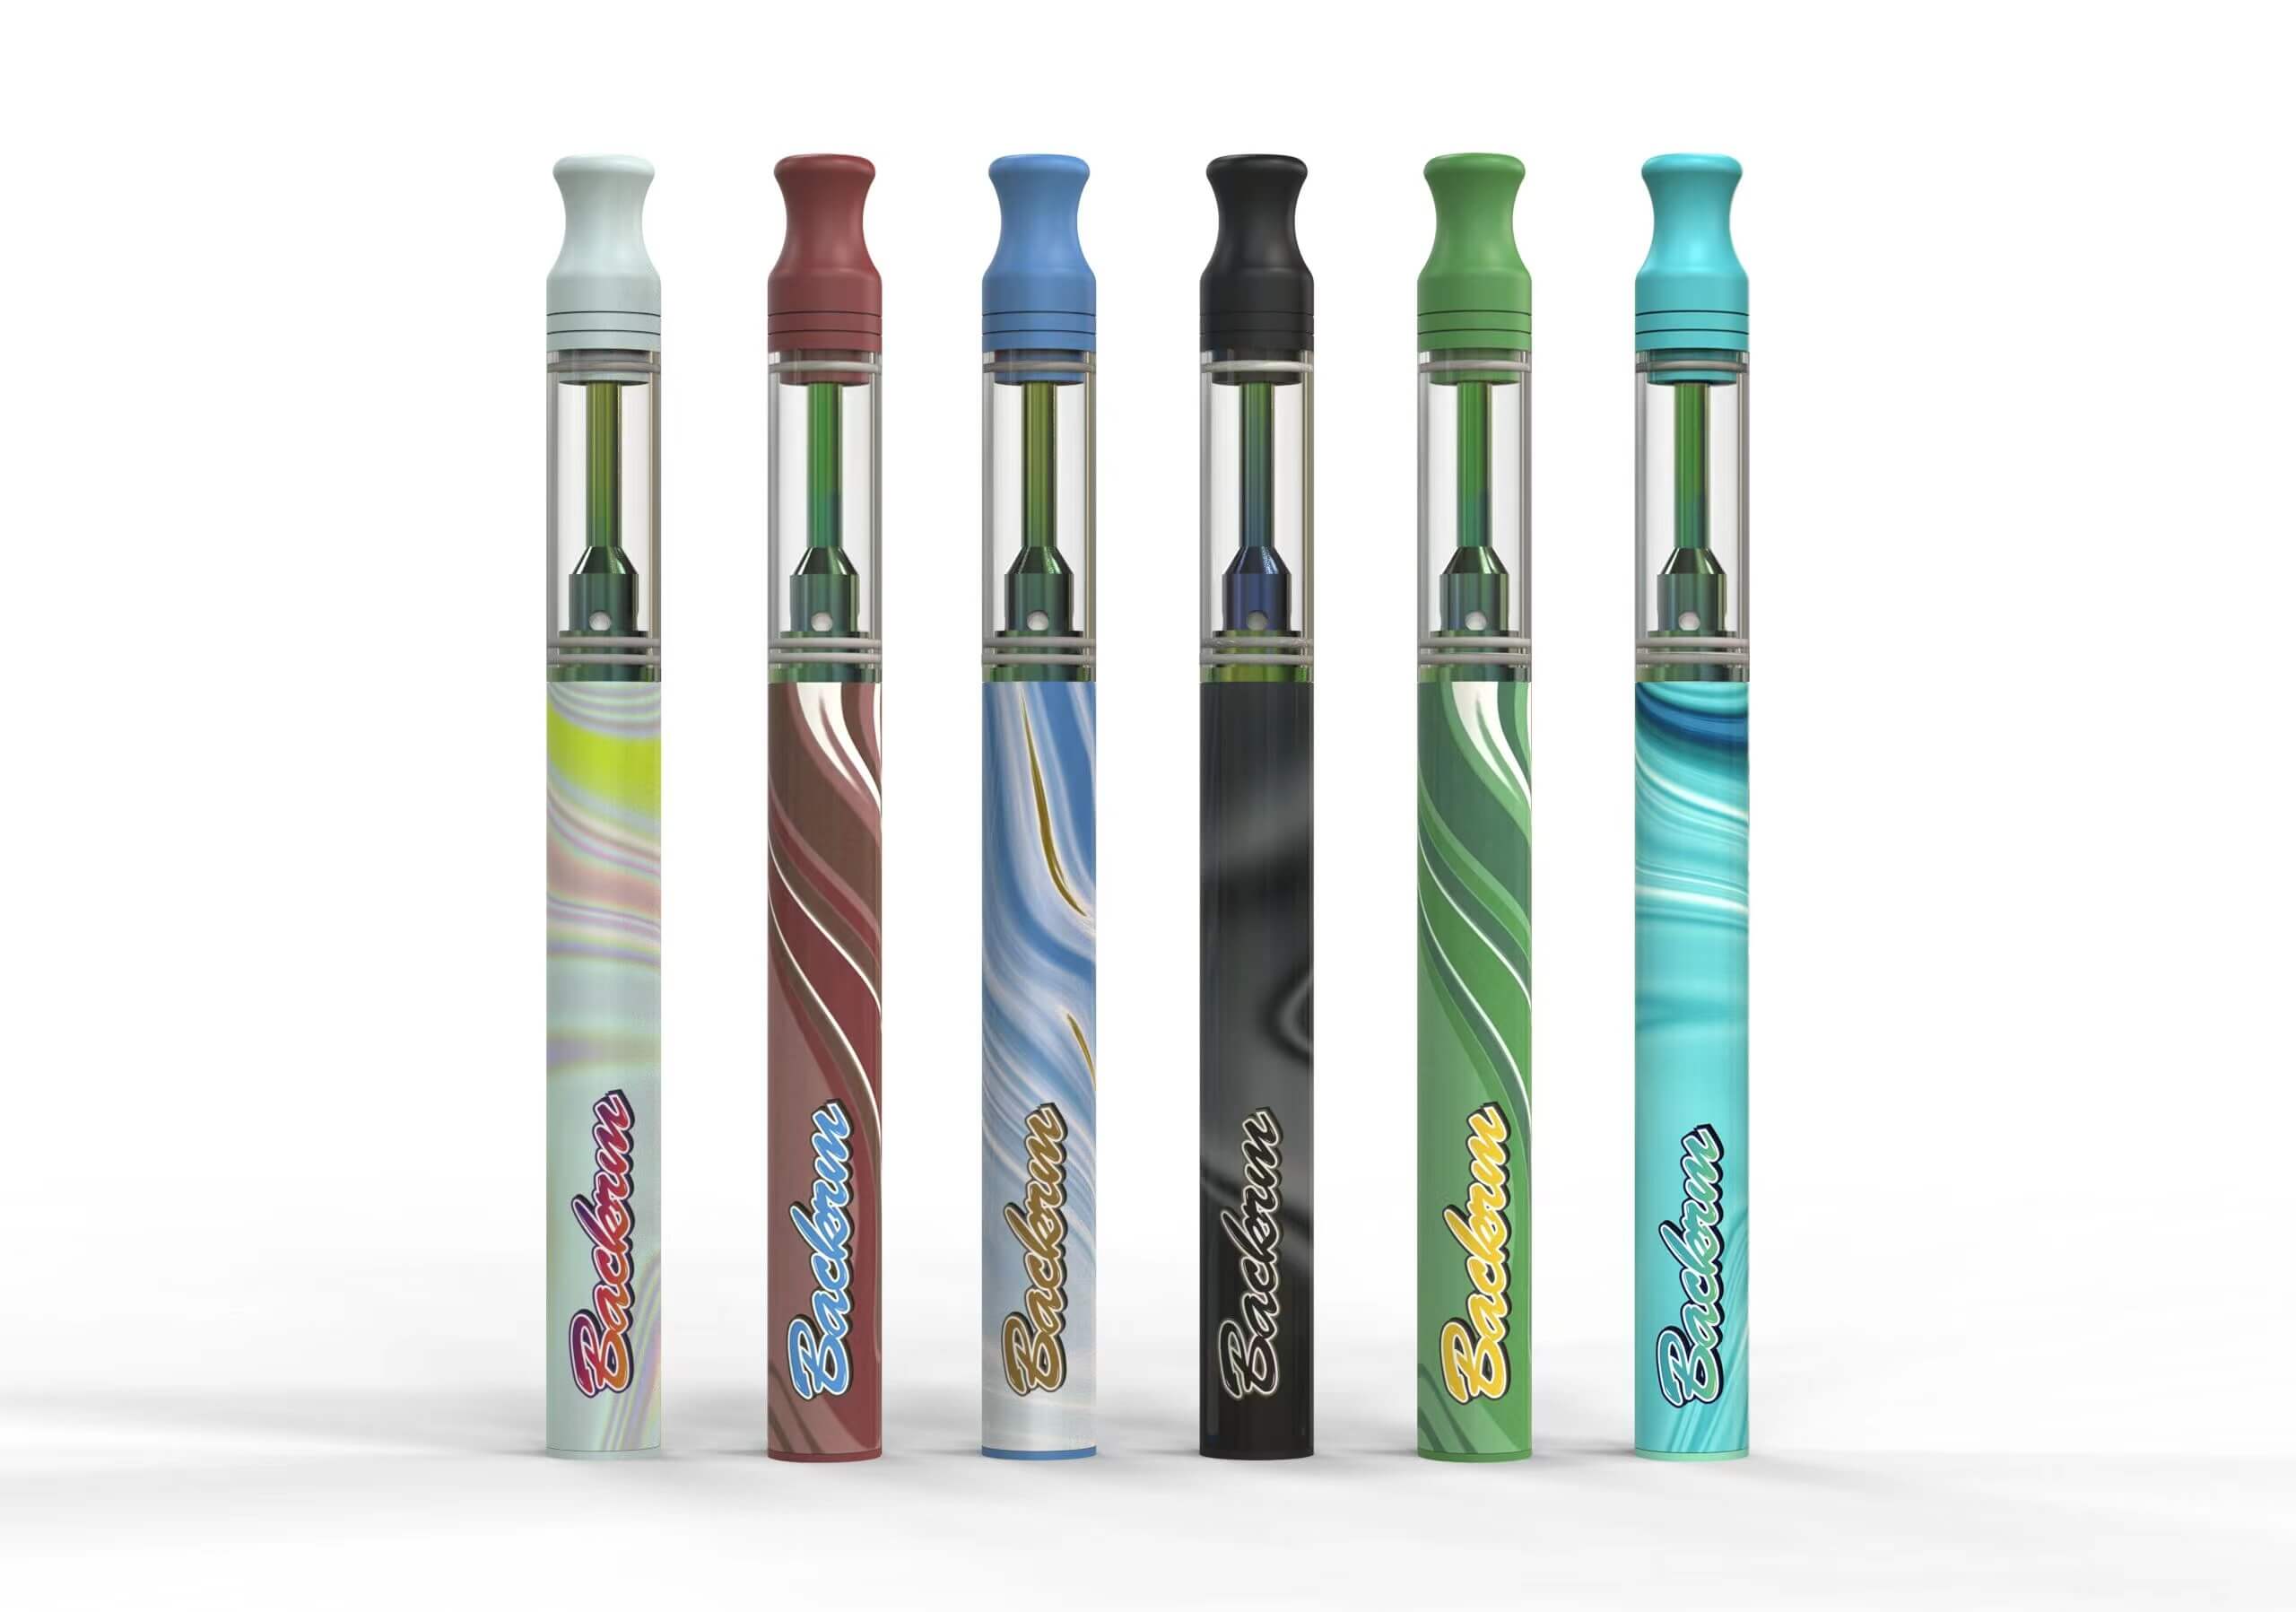 Backun Disposable CBD Cannabis Vape Pen Battery 